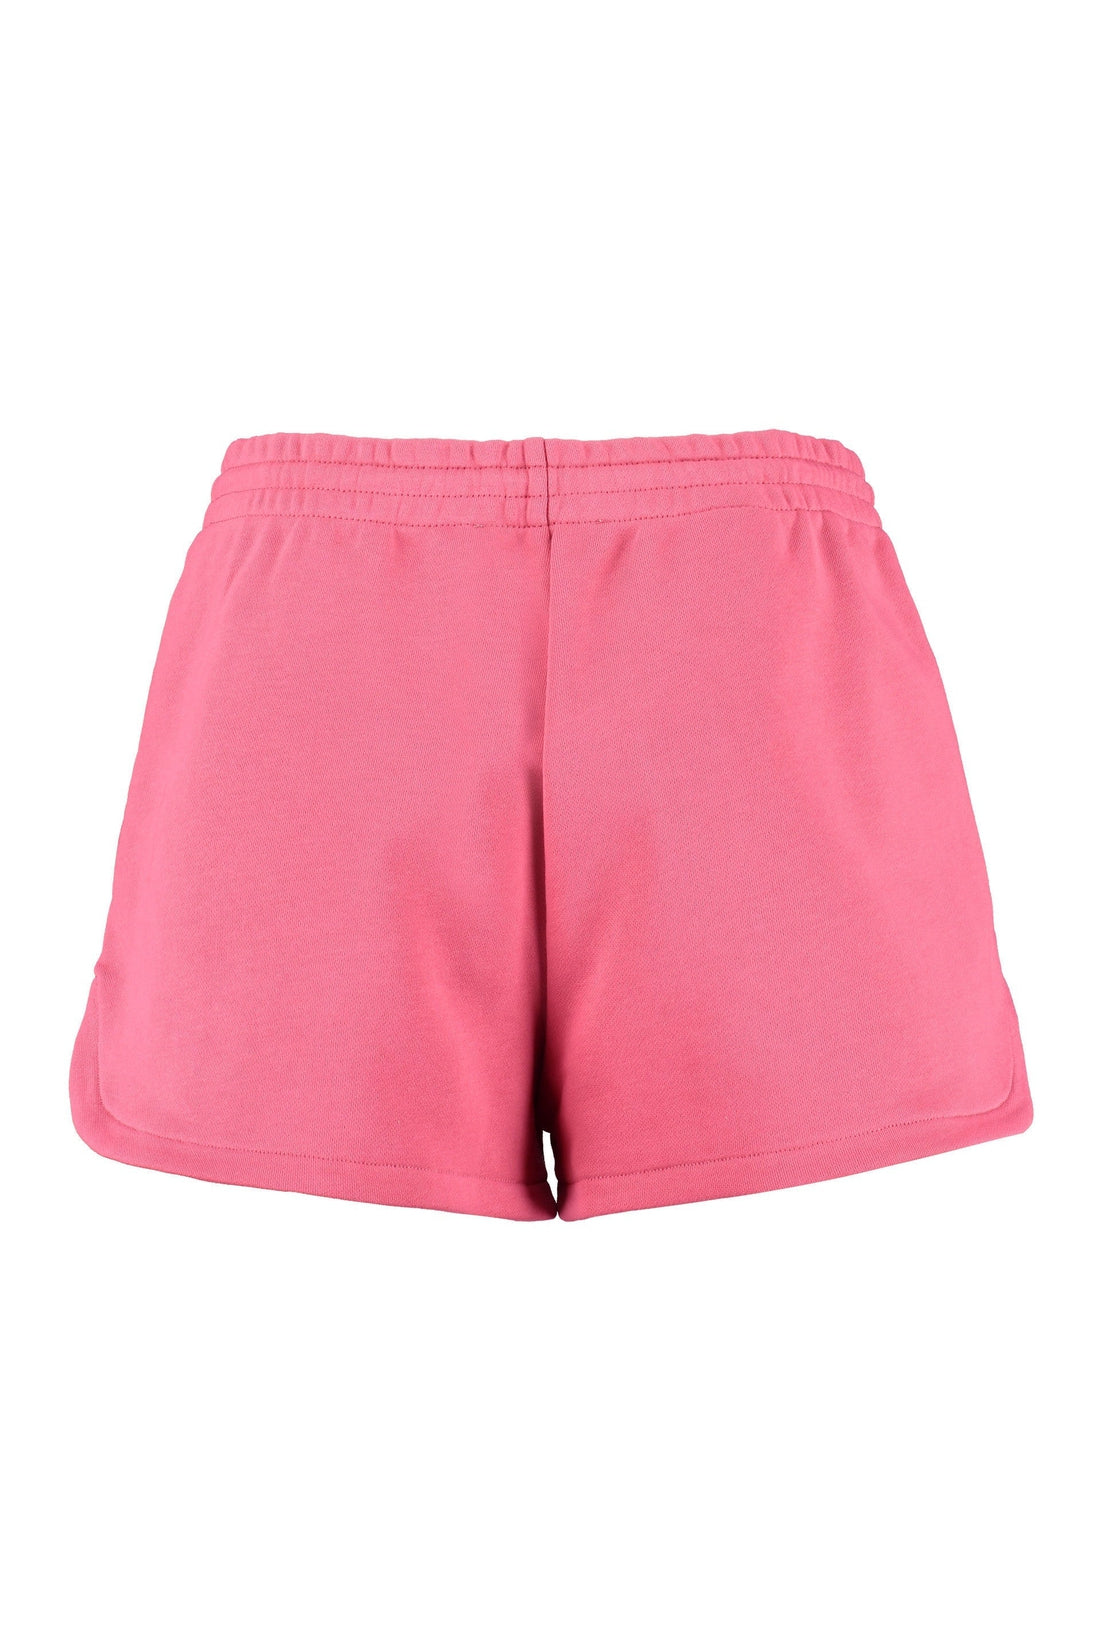 Moschino-OUTLET-SALE-Cotton shorts-ARCHIVIST